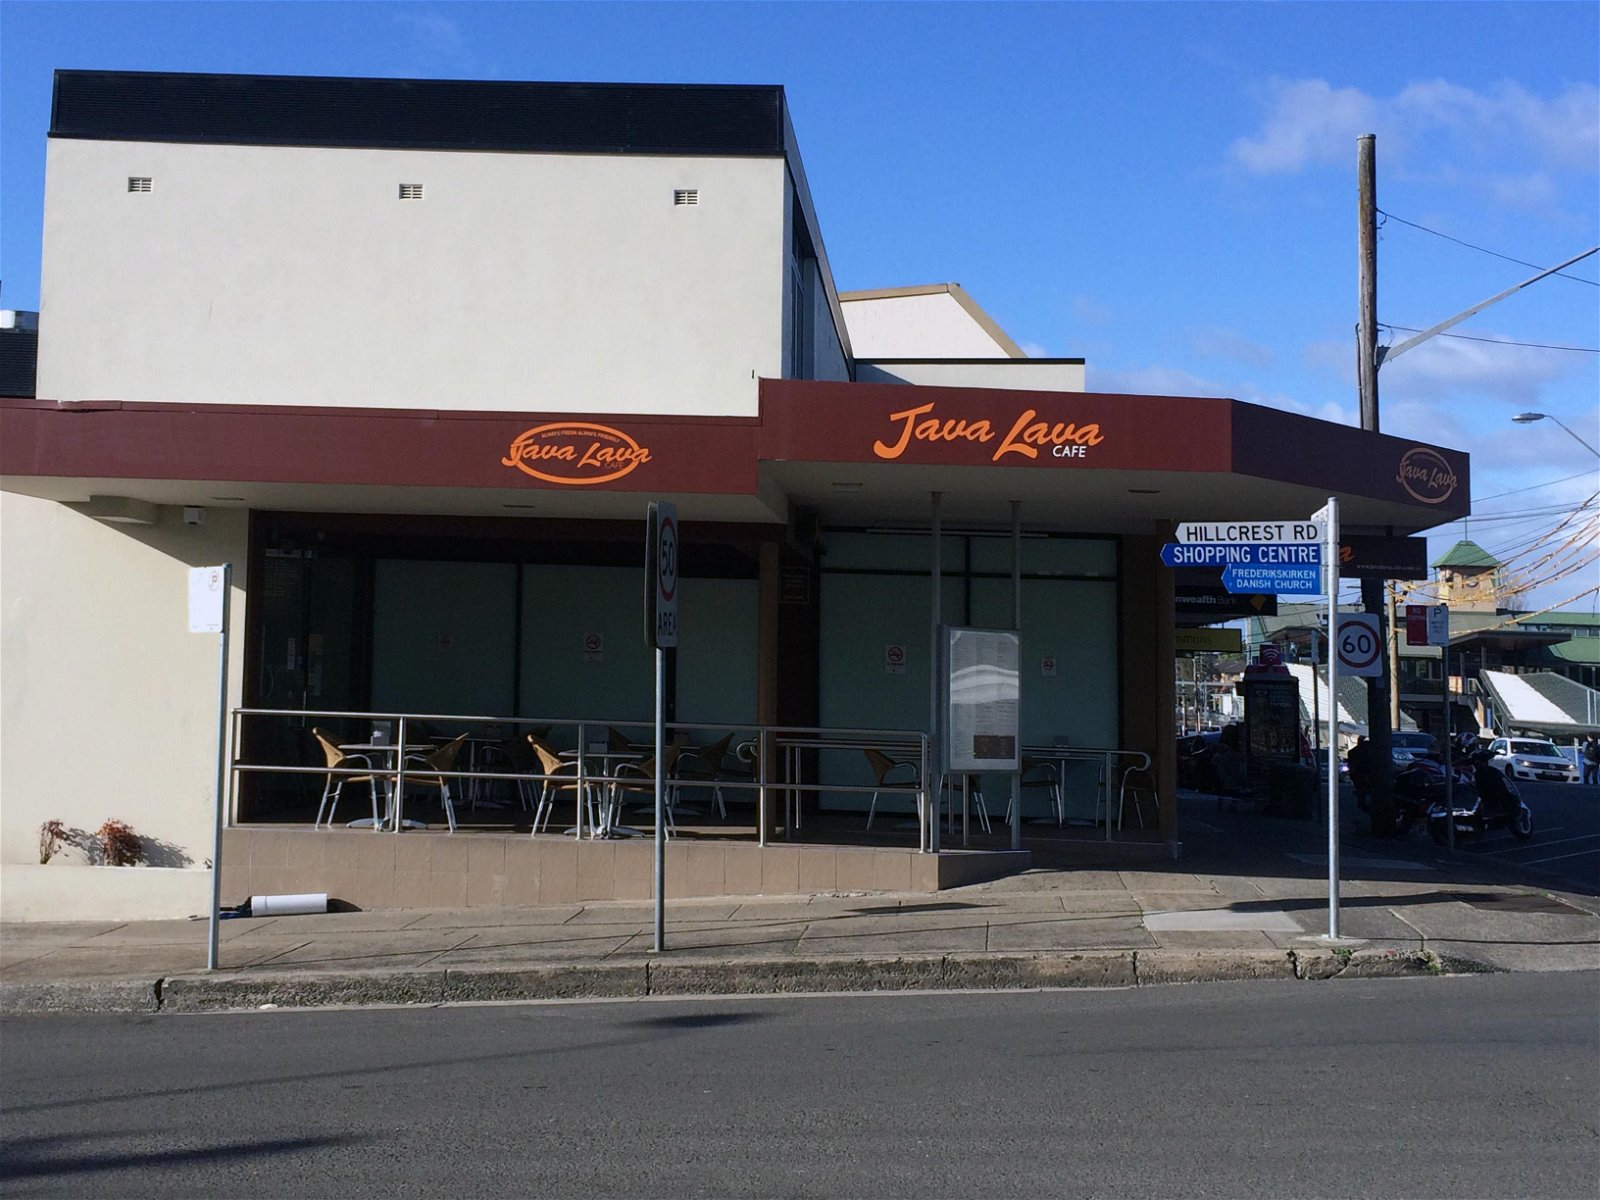 Javalava Cafe - Pubs Sydney